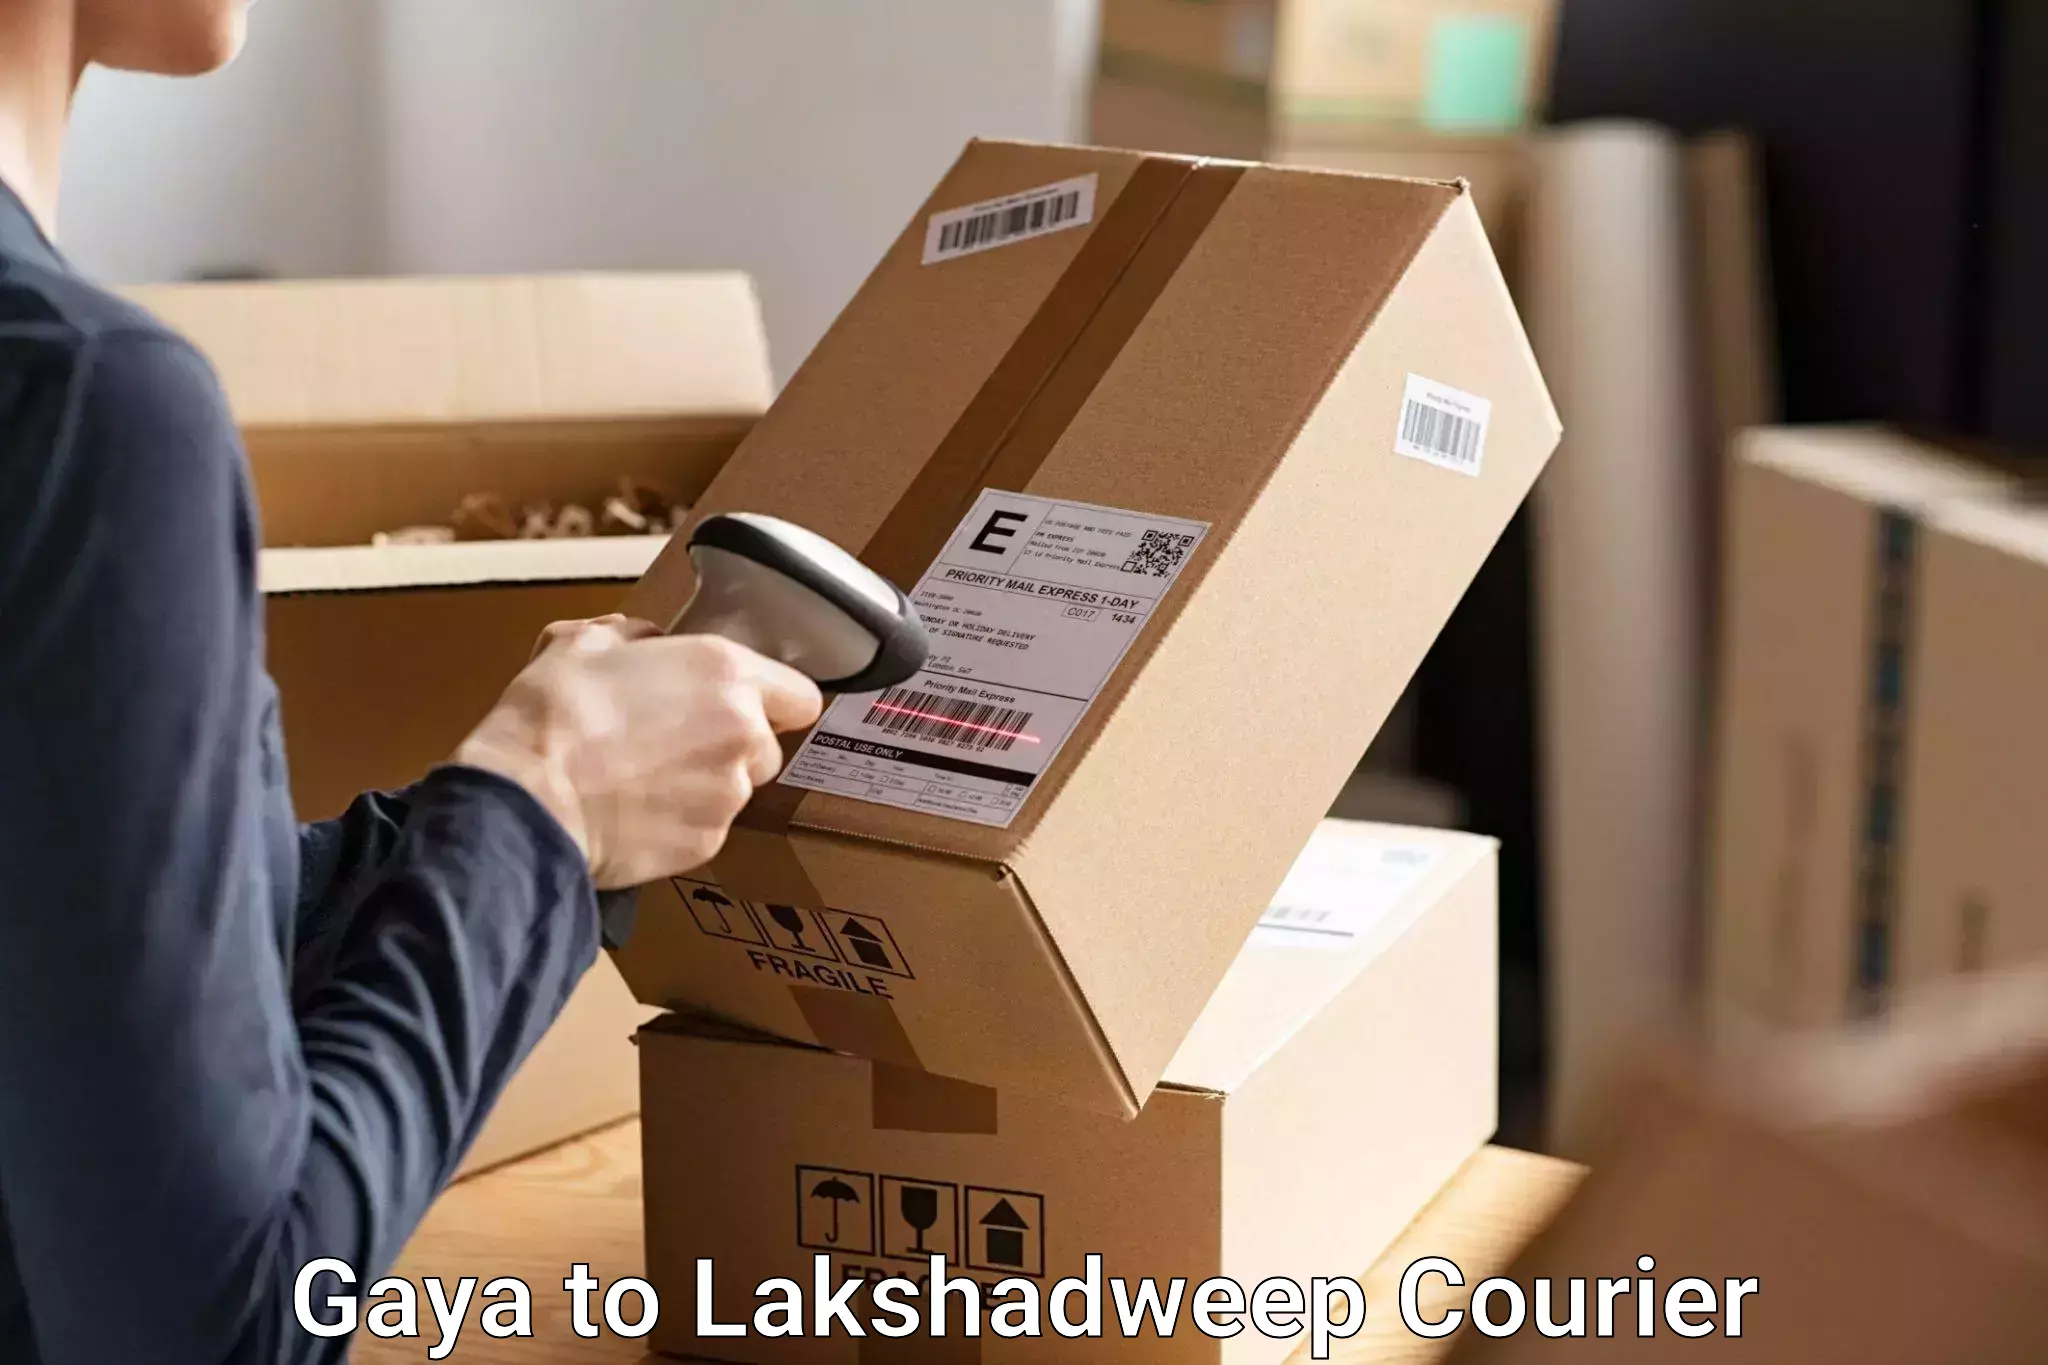 Baggage relocation service Gaya to Lakshadweep